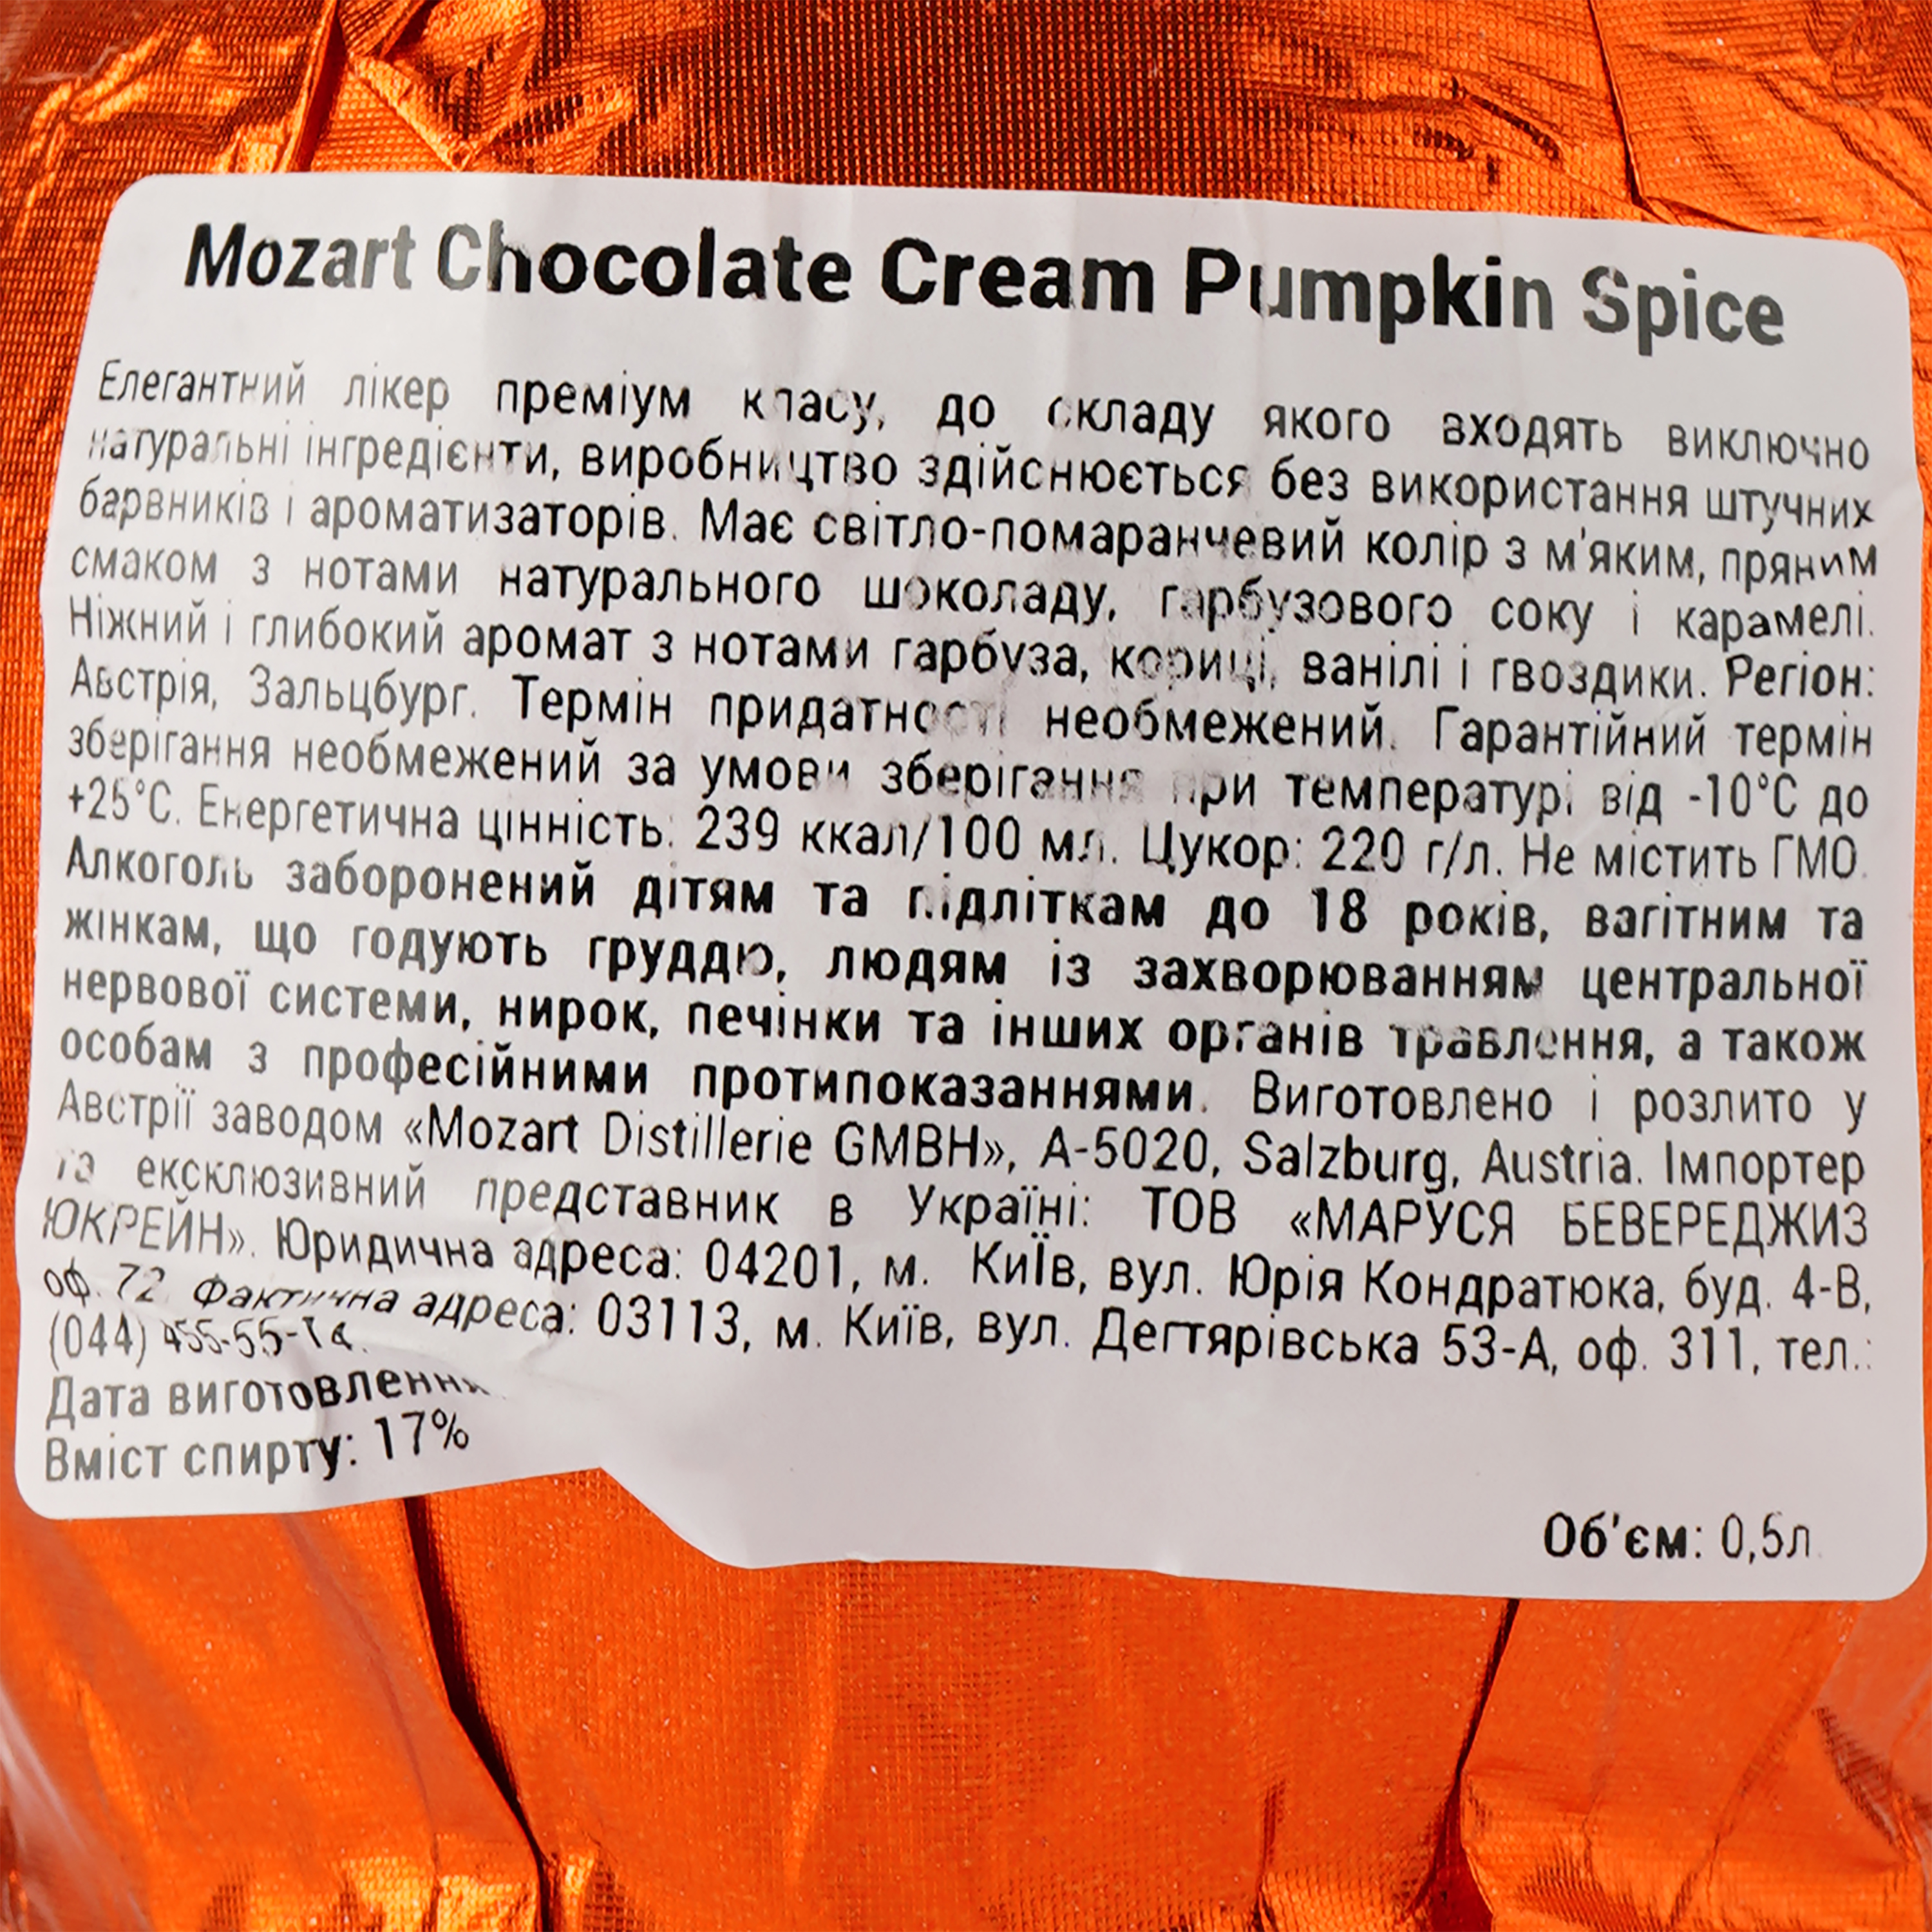 Ликер Mozart Chocolate Cream Pumpkin Spice, 17%, 0,5 л - фото 3